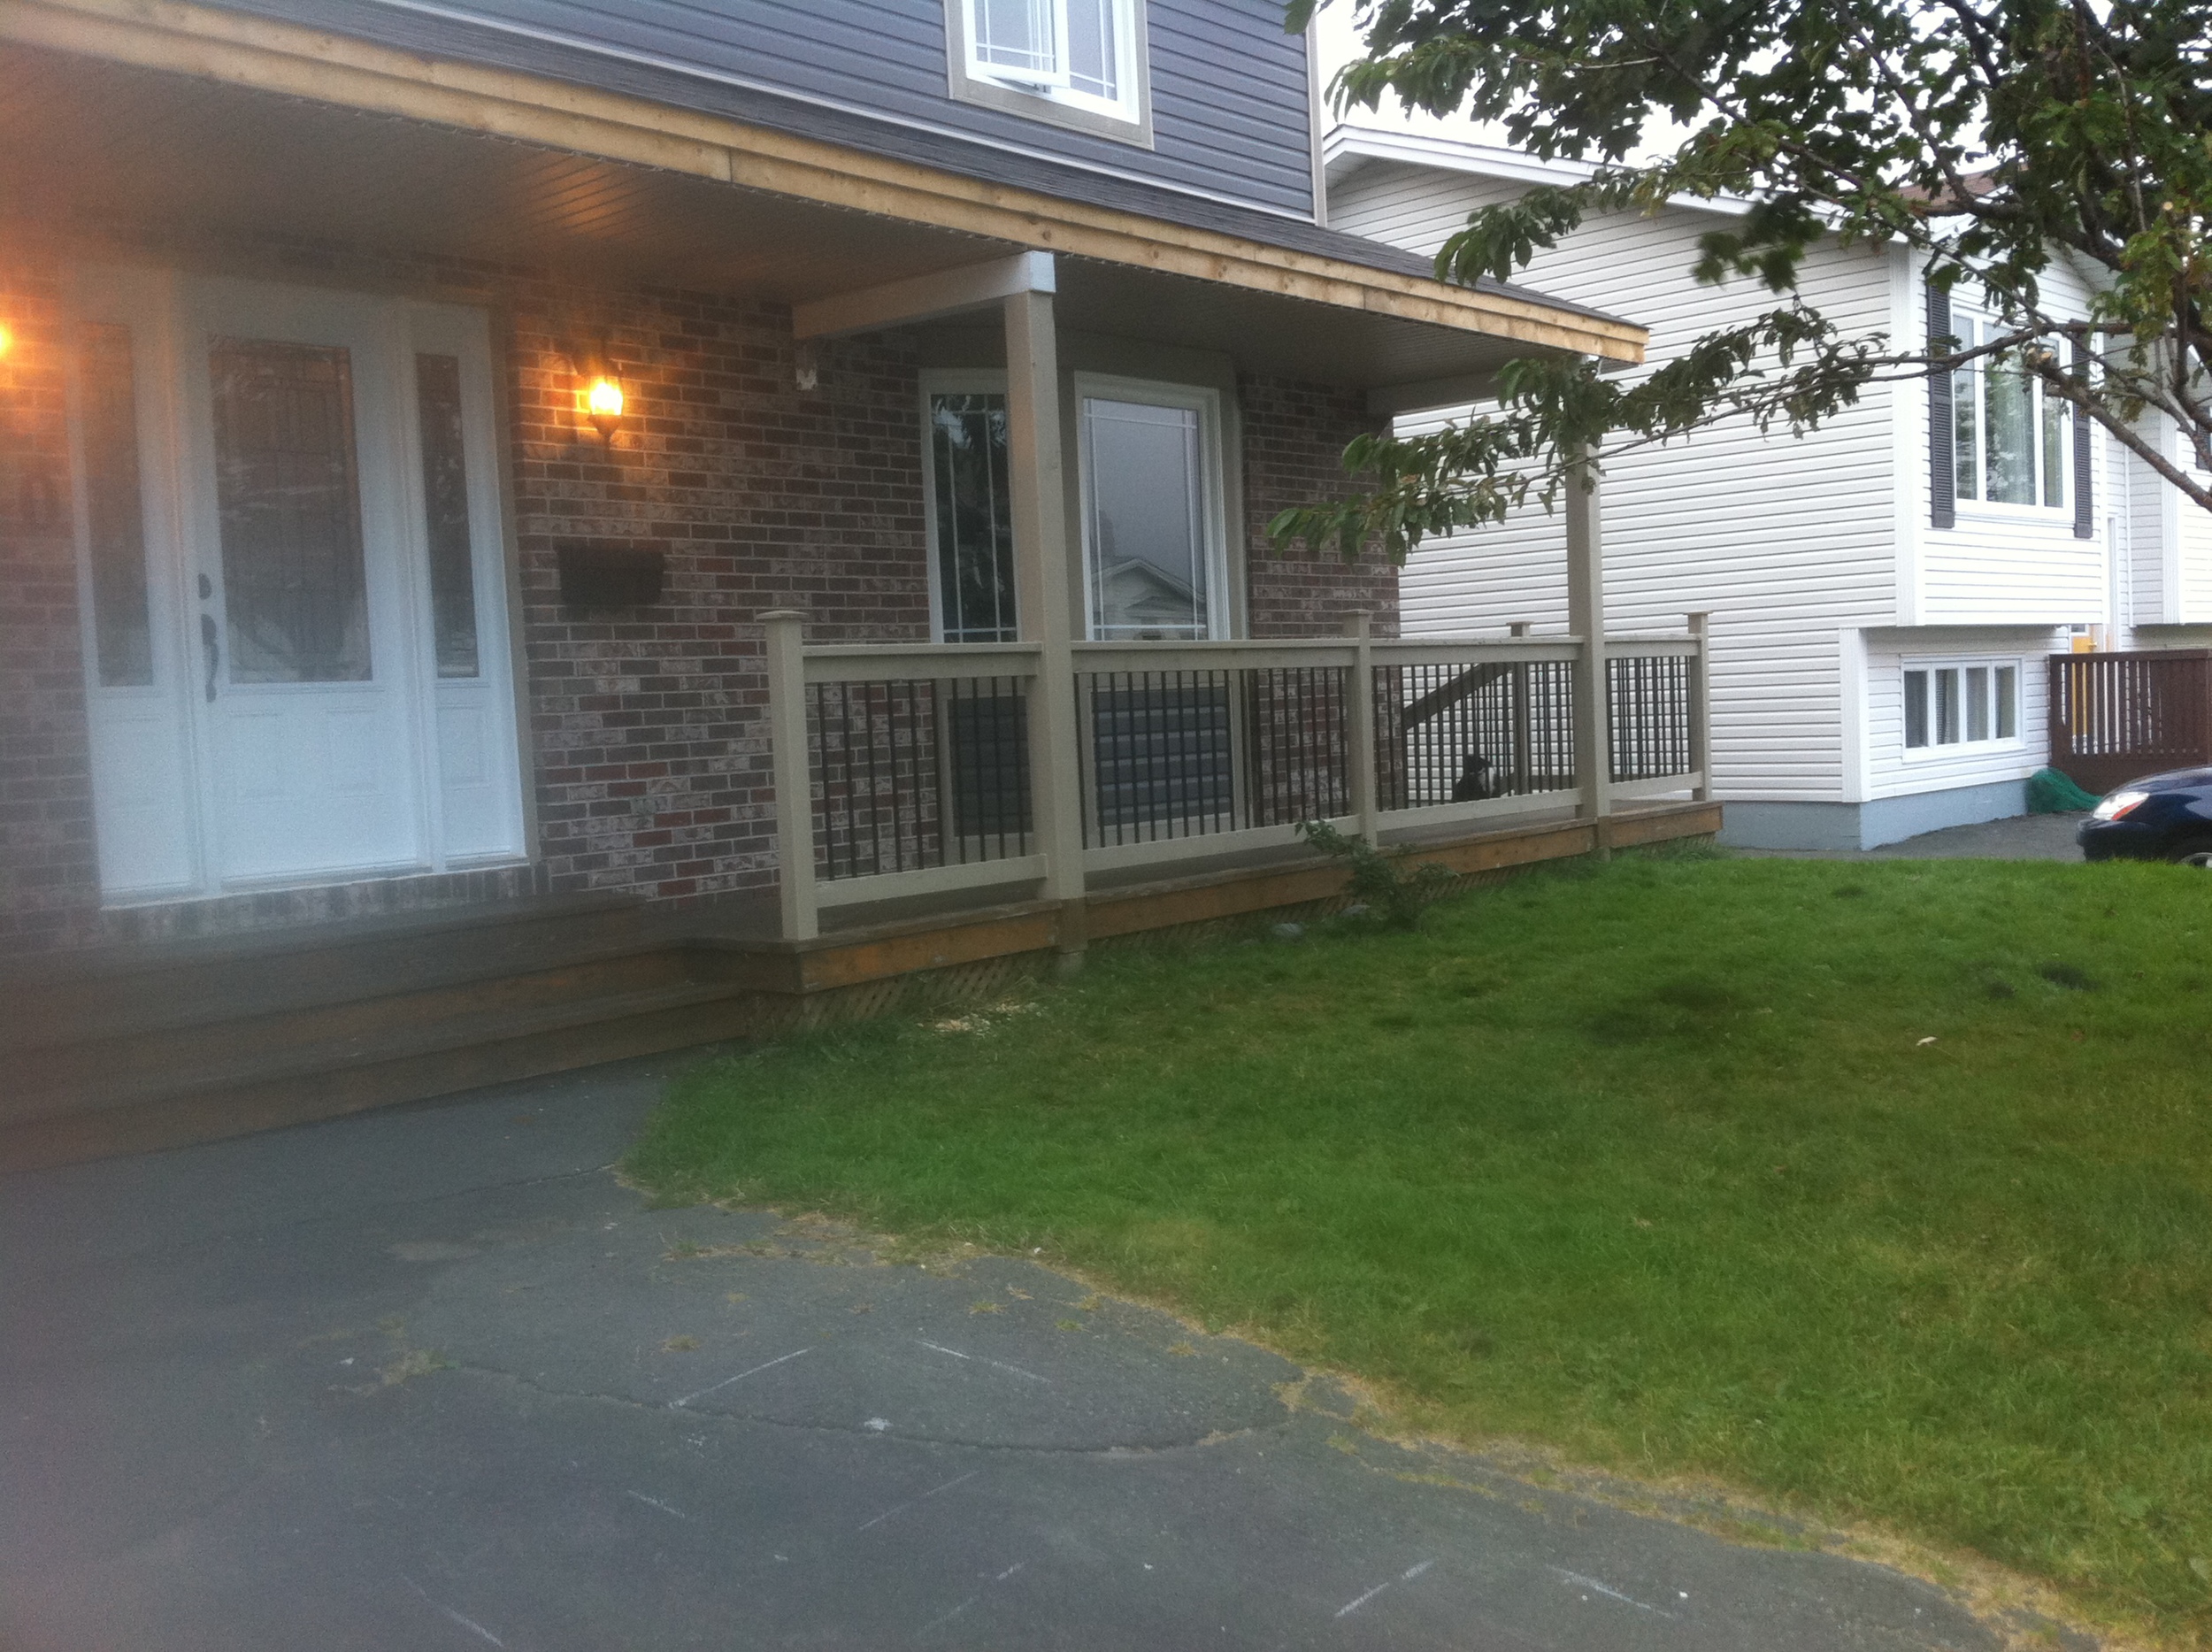 New windows, doors, siding and porch rail